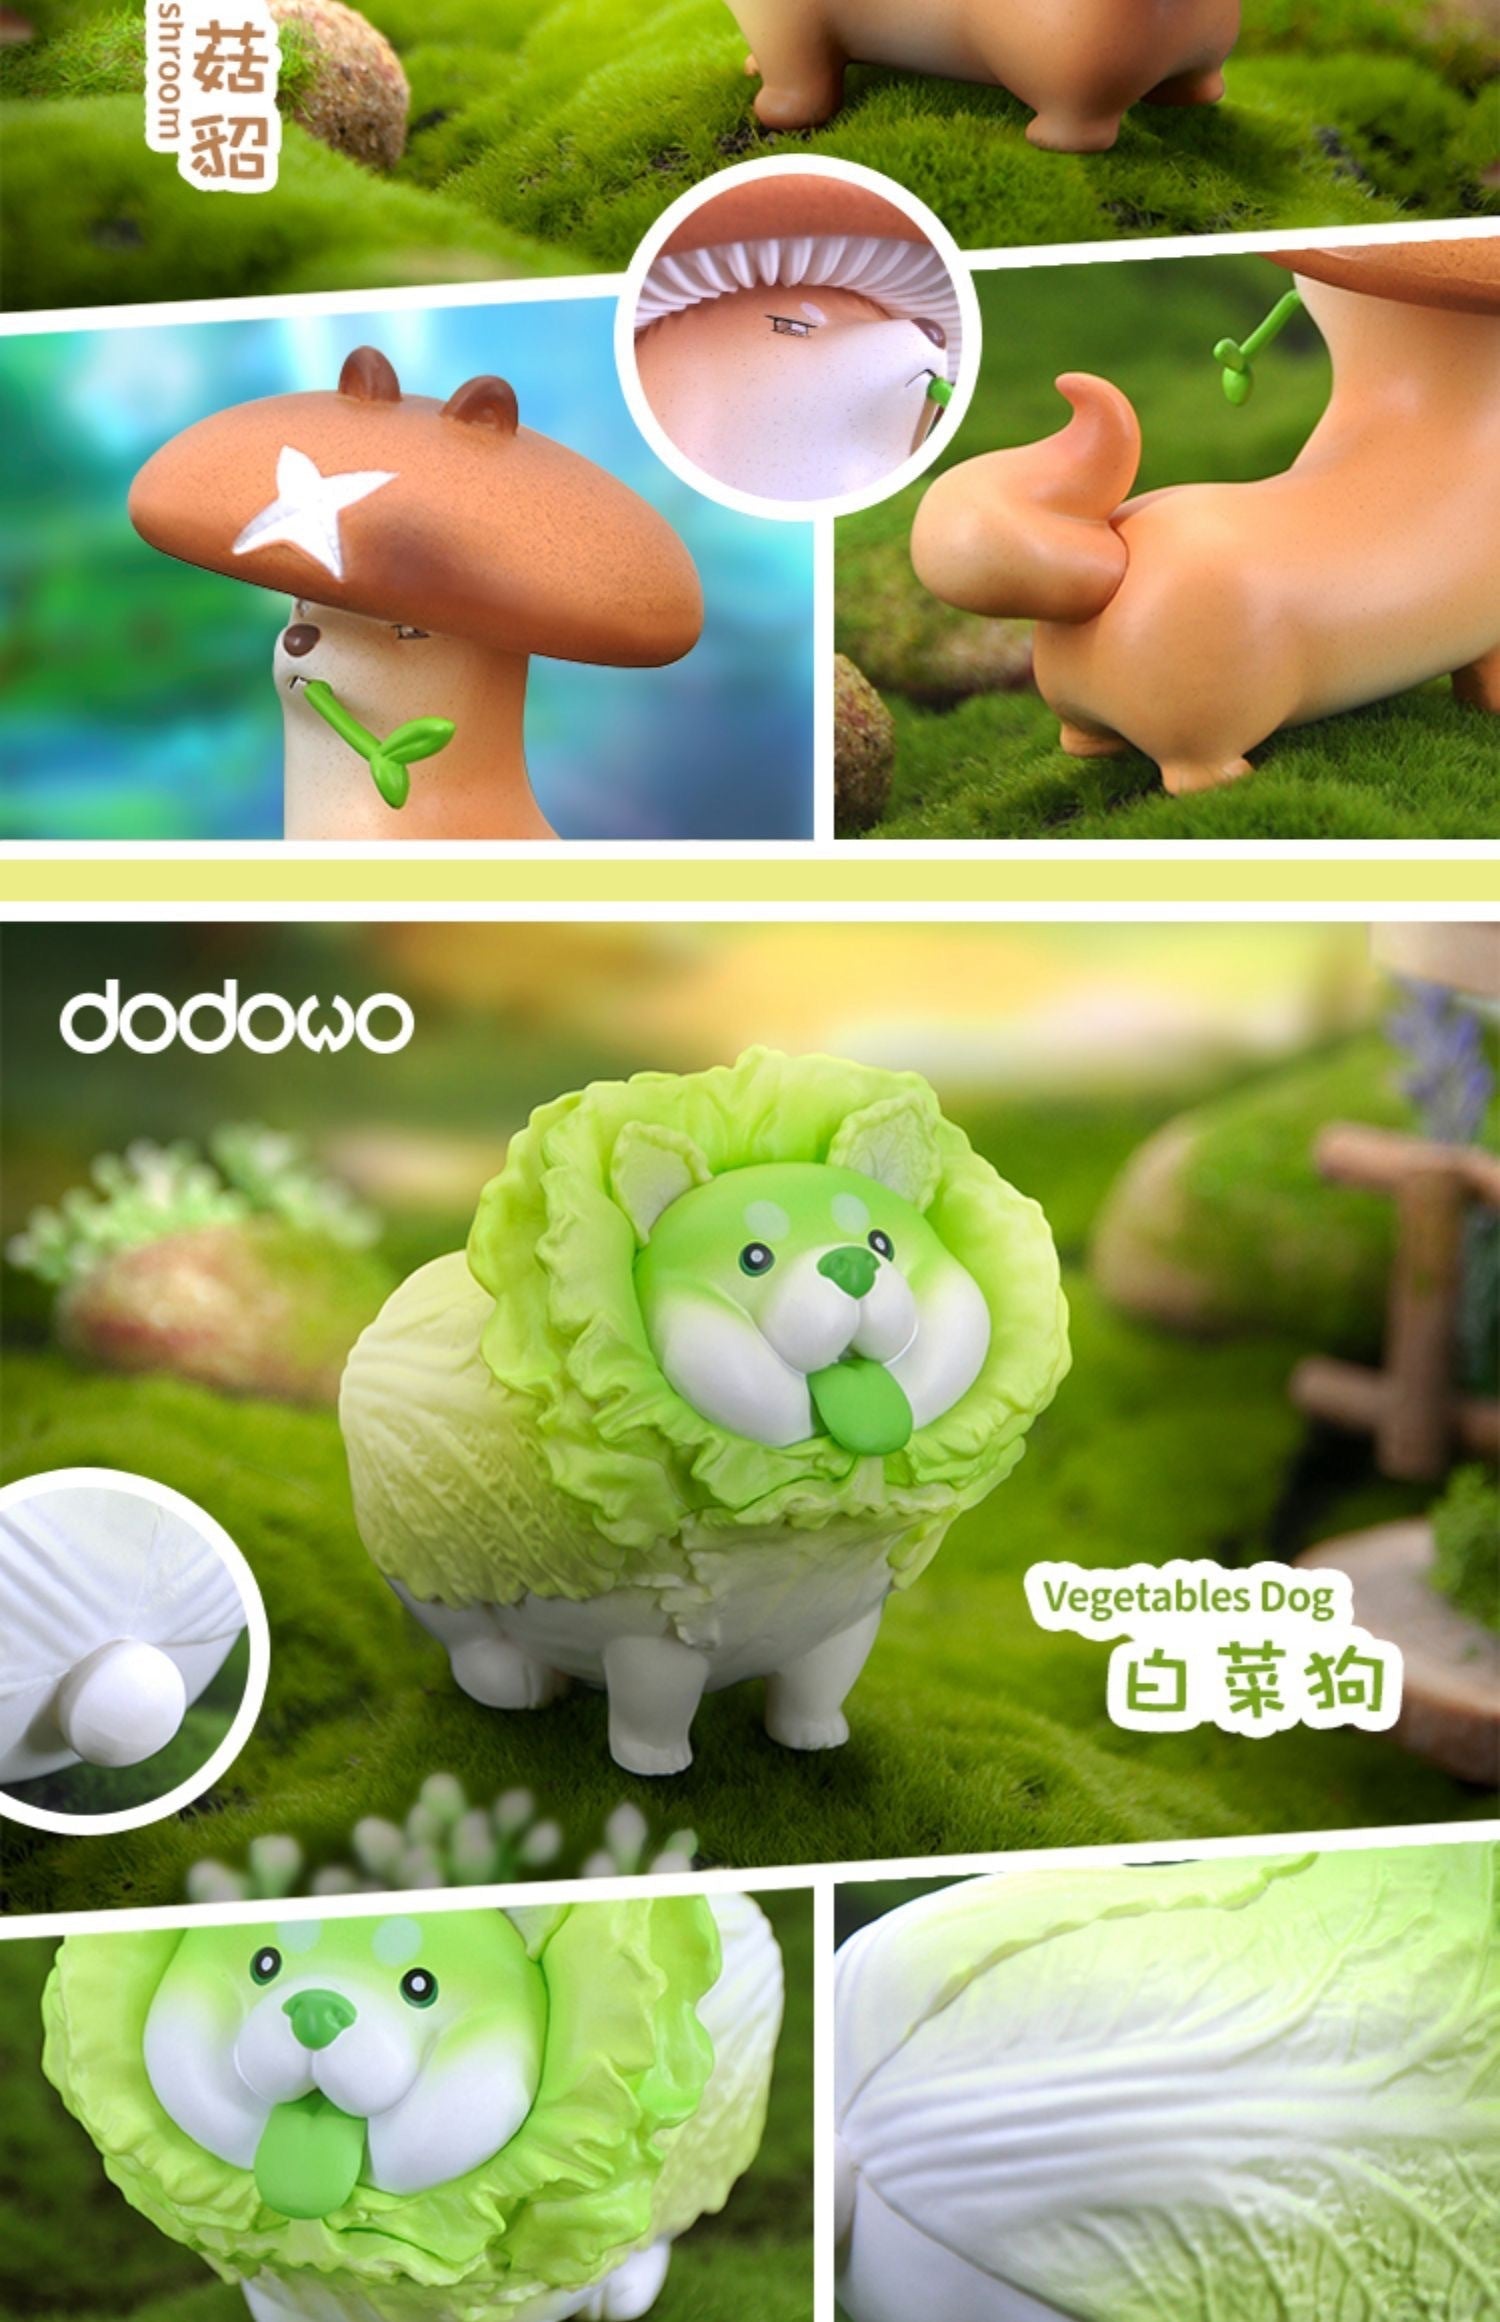 Vegetables Fairy Blind Box Series by Dodowo